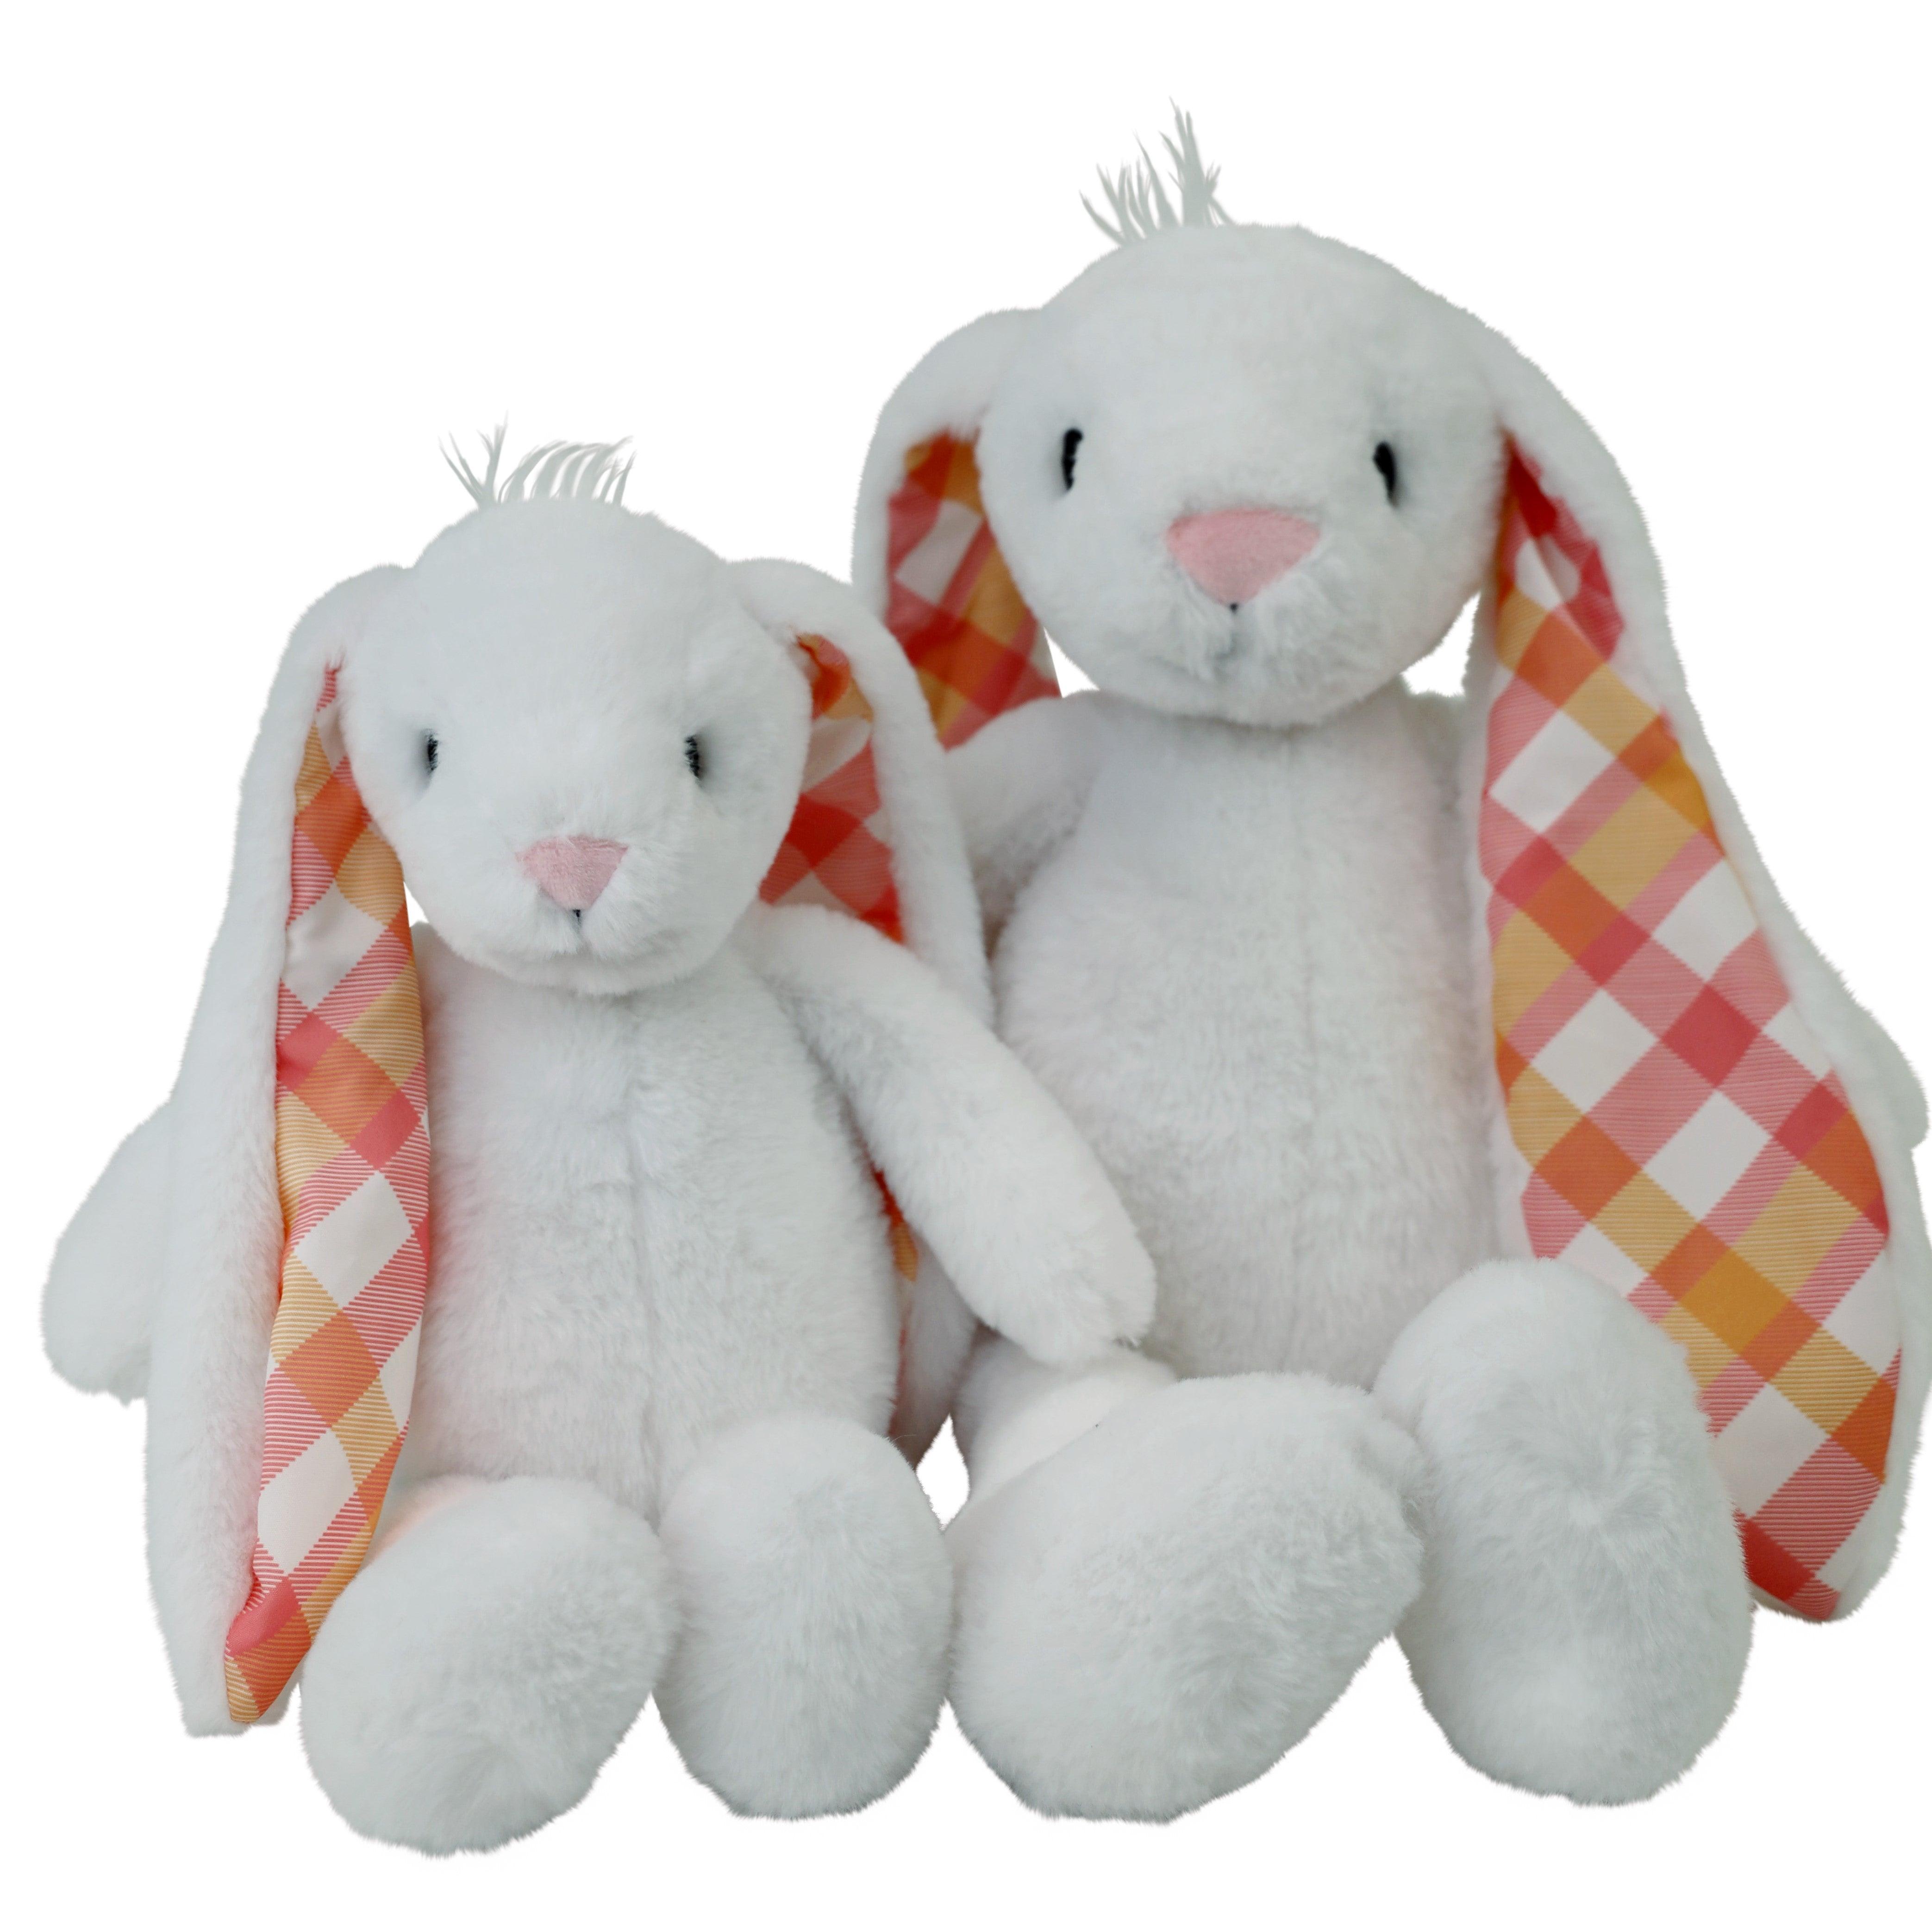 Plushible Plaid Eared Bunny White - OrangeOnions Wholesale